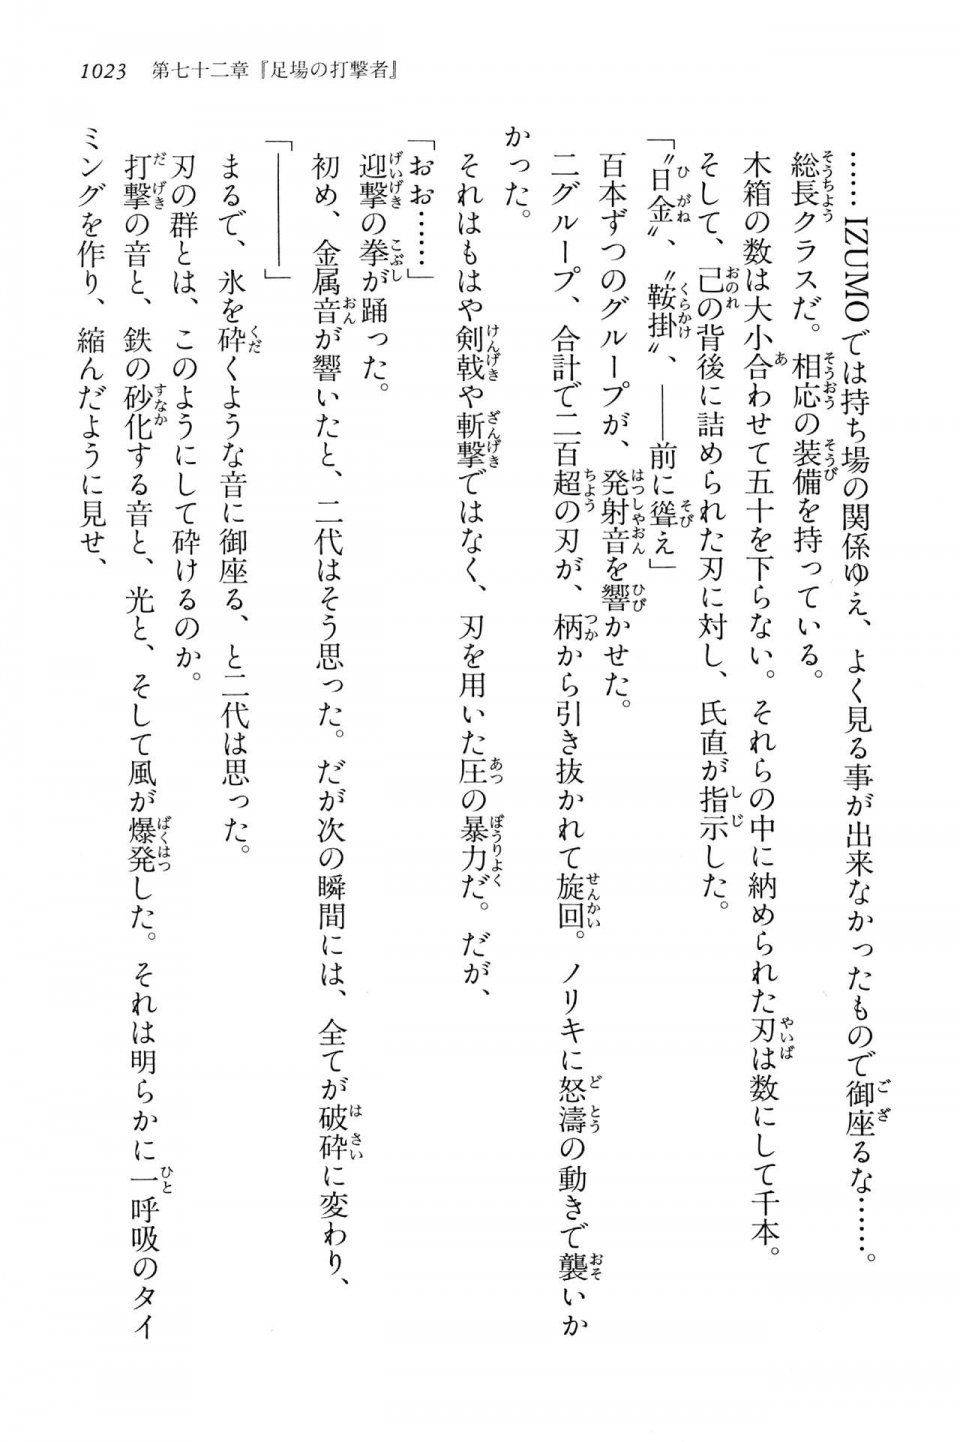 Kyoukai Senjou no Horizon LN Vol 15(6C) Part 2 - Photo #493